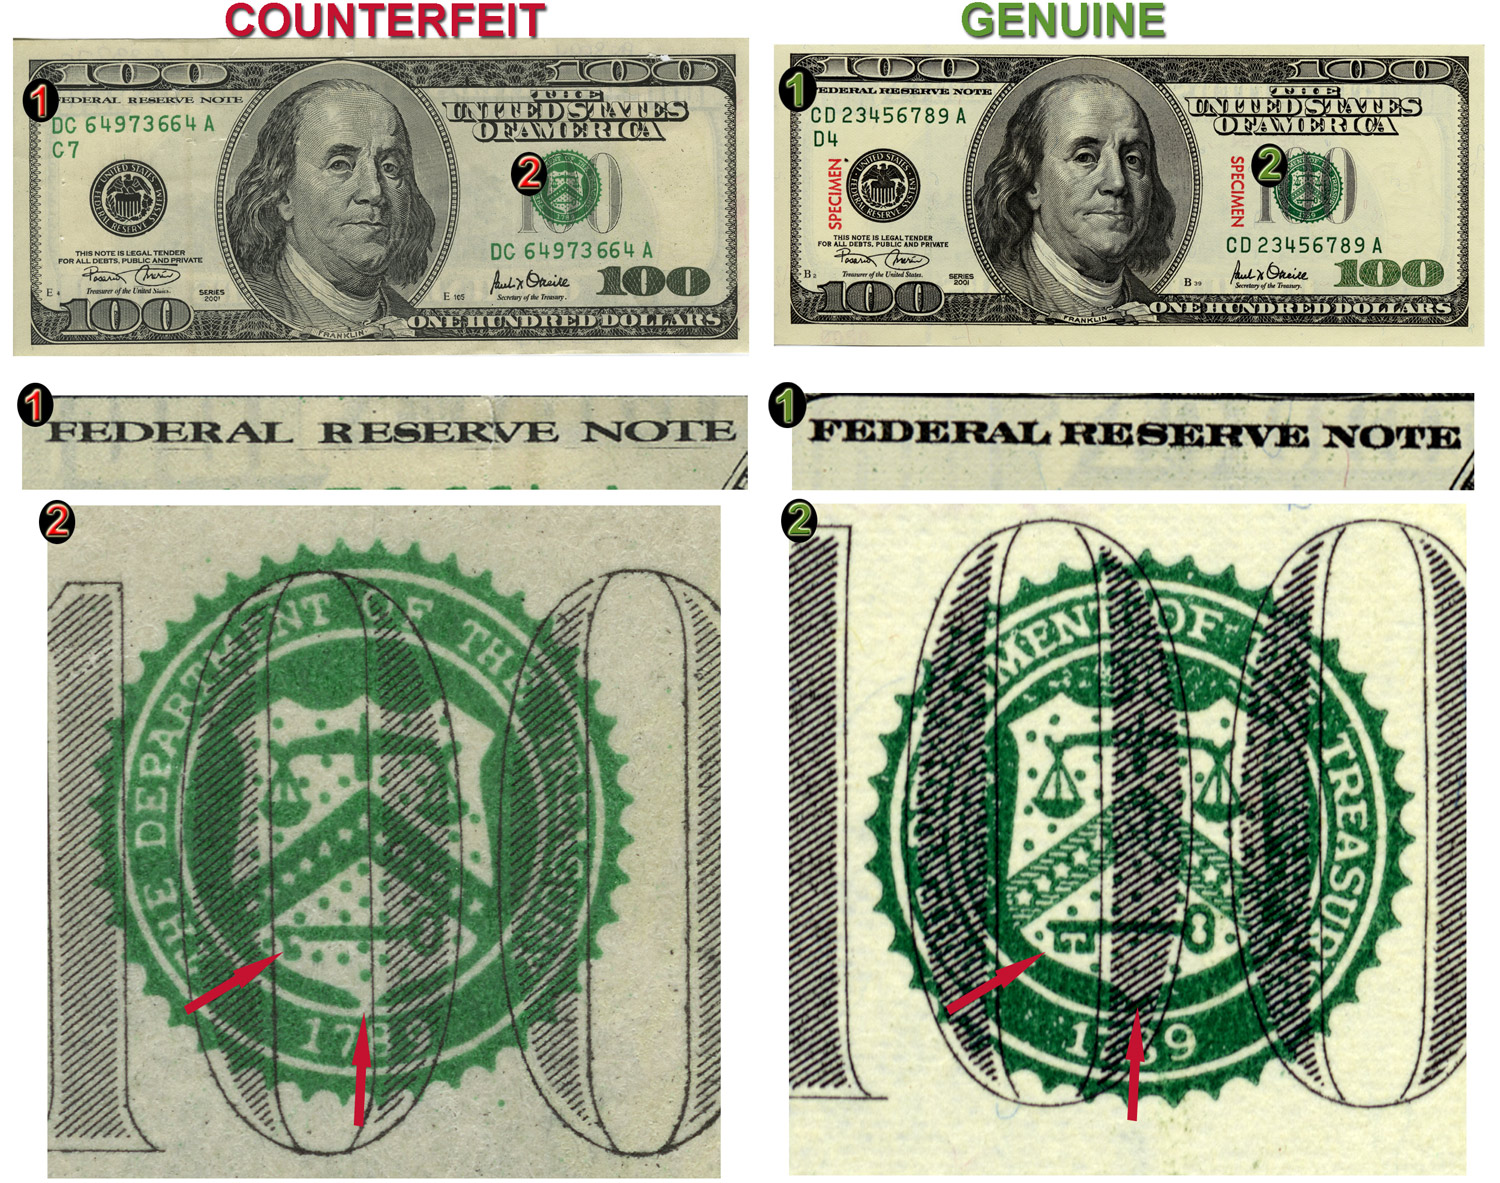 counterfeit money warning